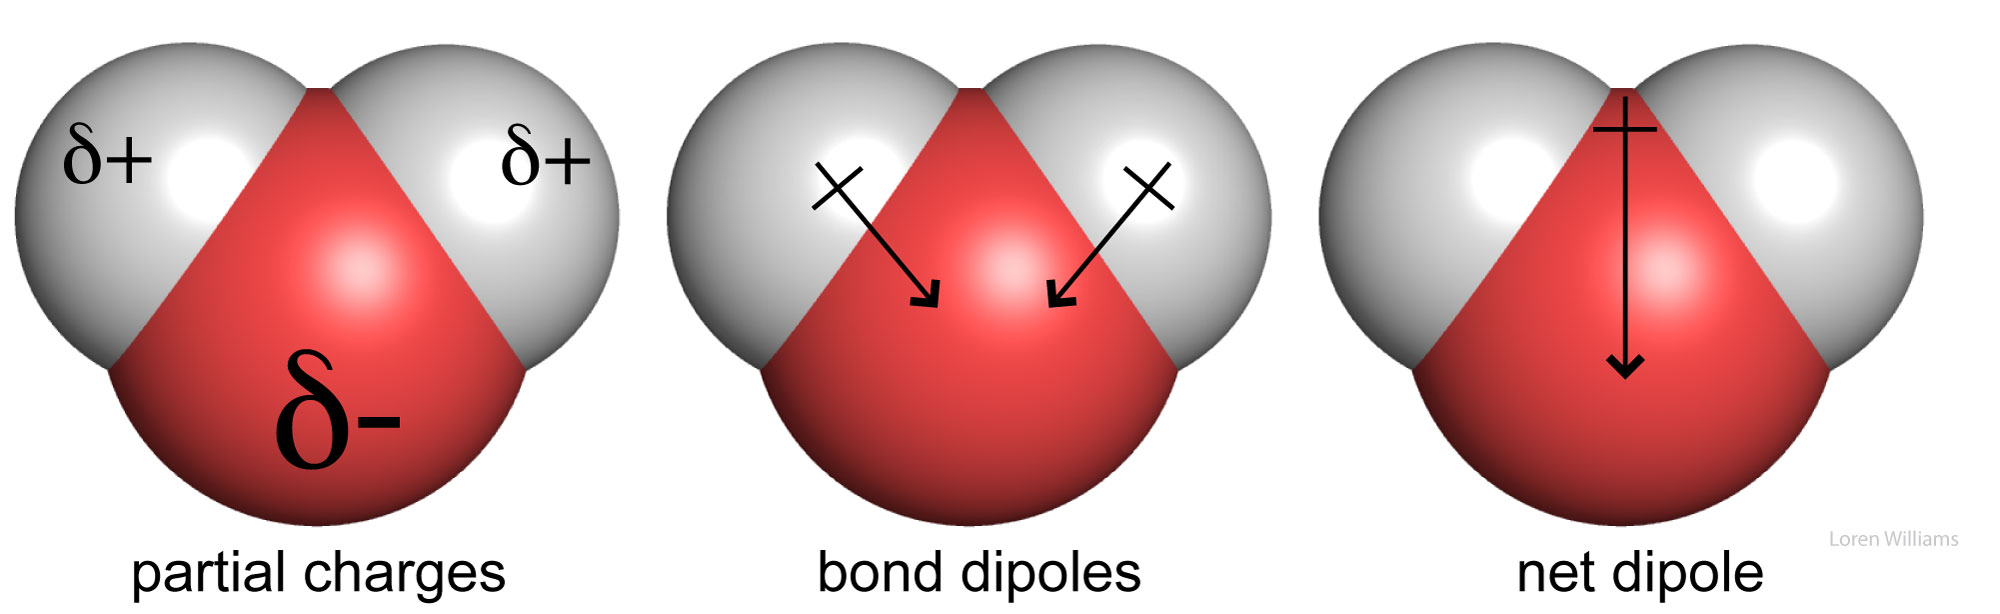 bond dipole / molecular dipole